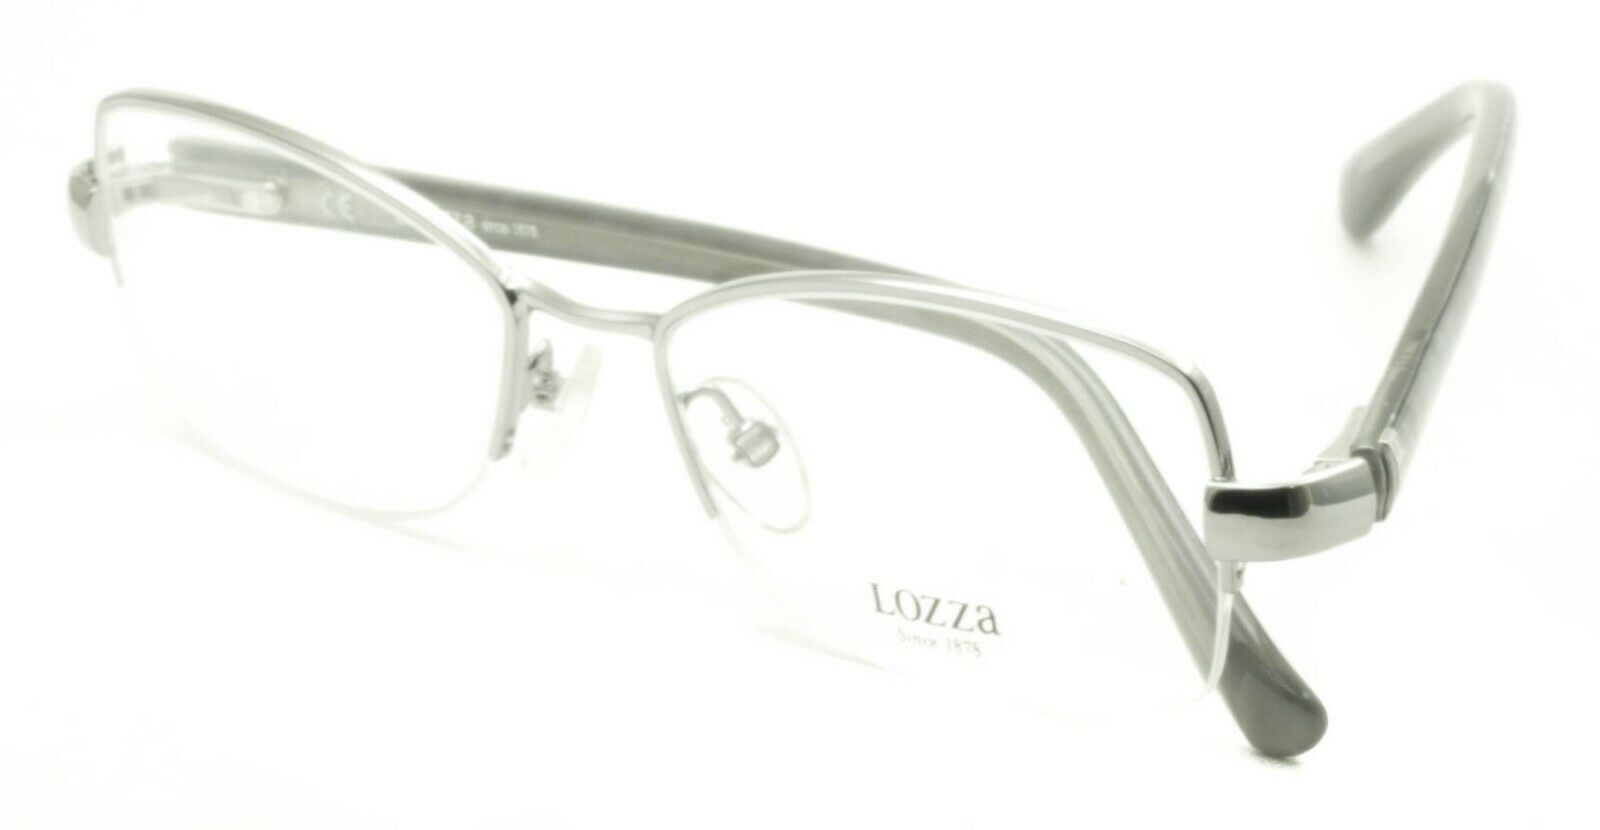 LOZZA VL2229 COL. 0S57 52mm Eyewear FRAMES RX Optical Eyeglasses Glasses-TRUSTED